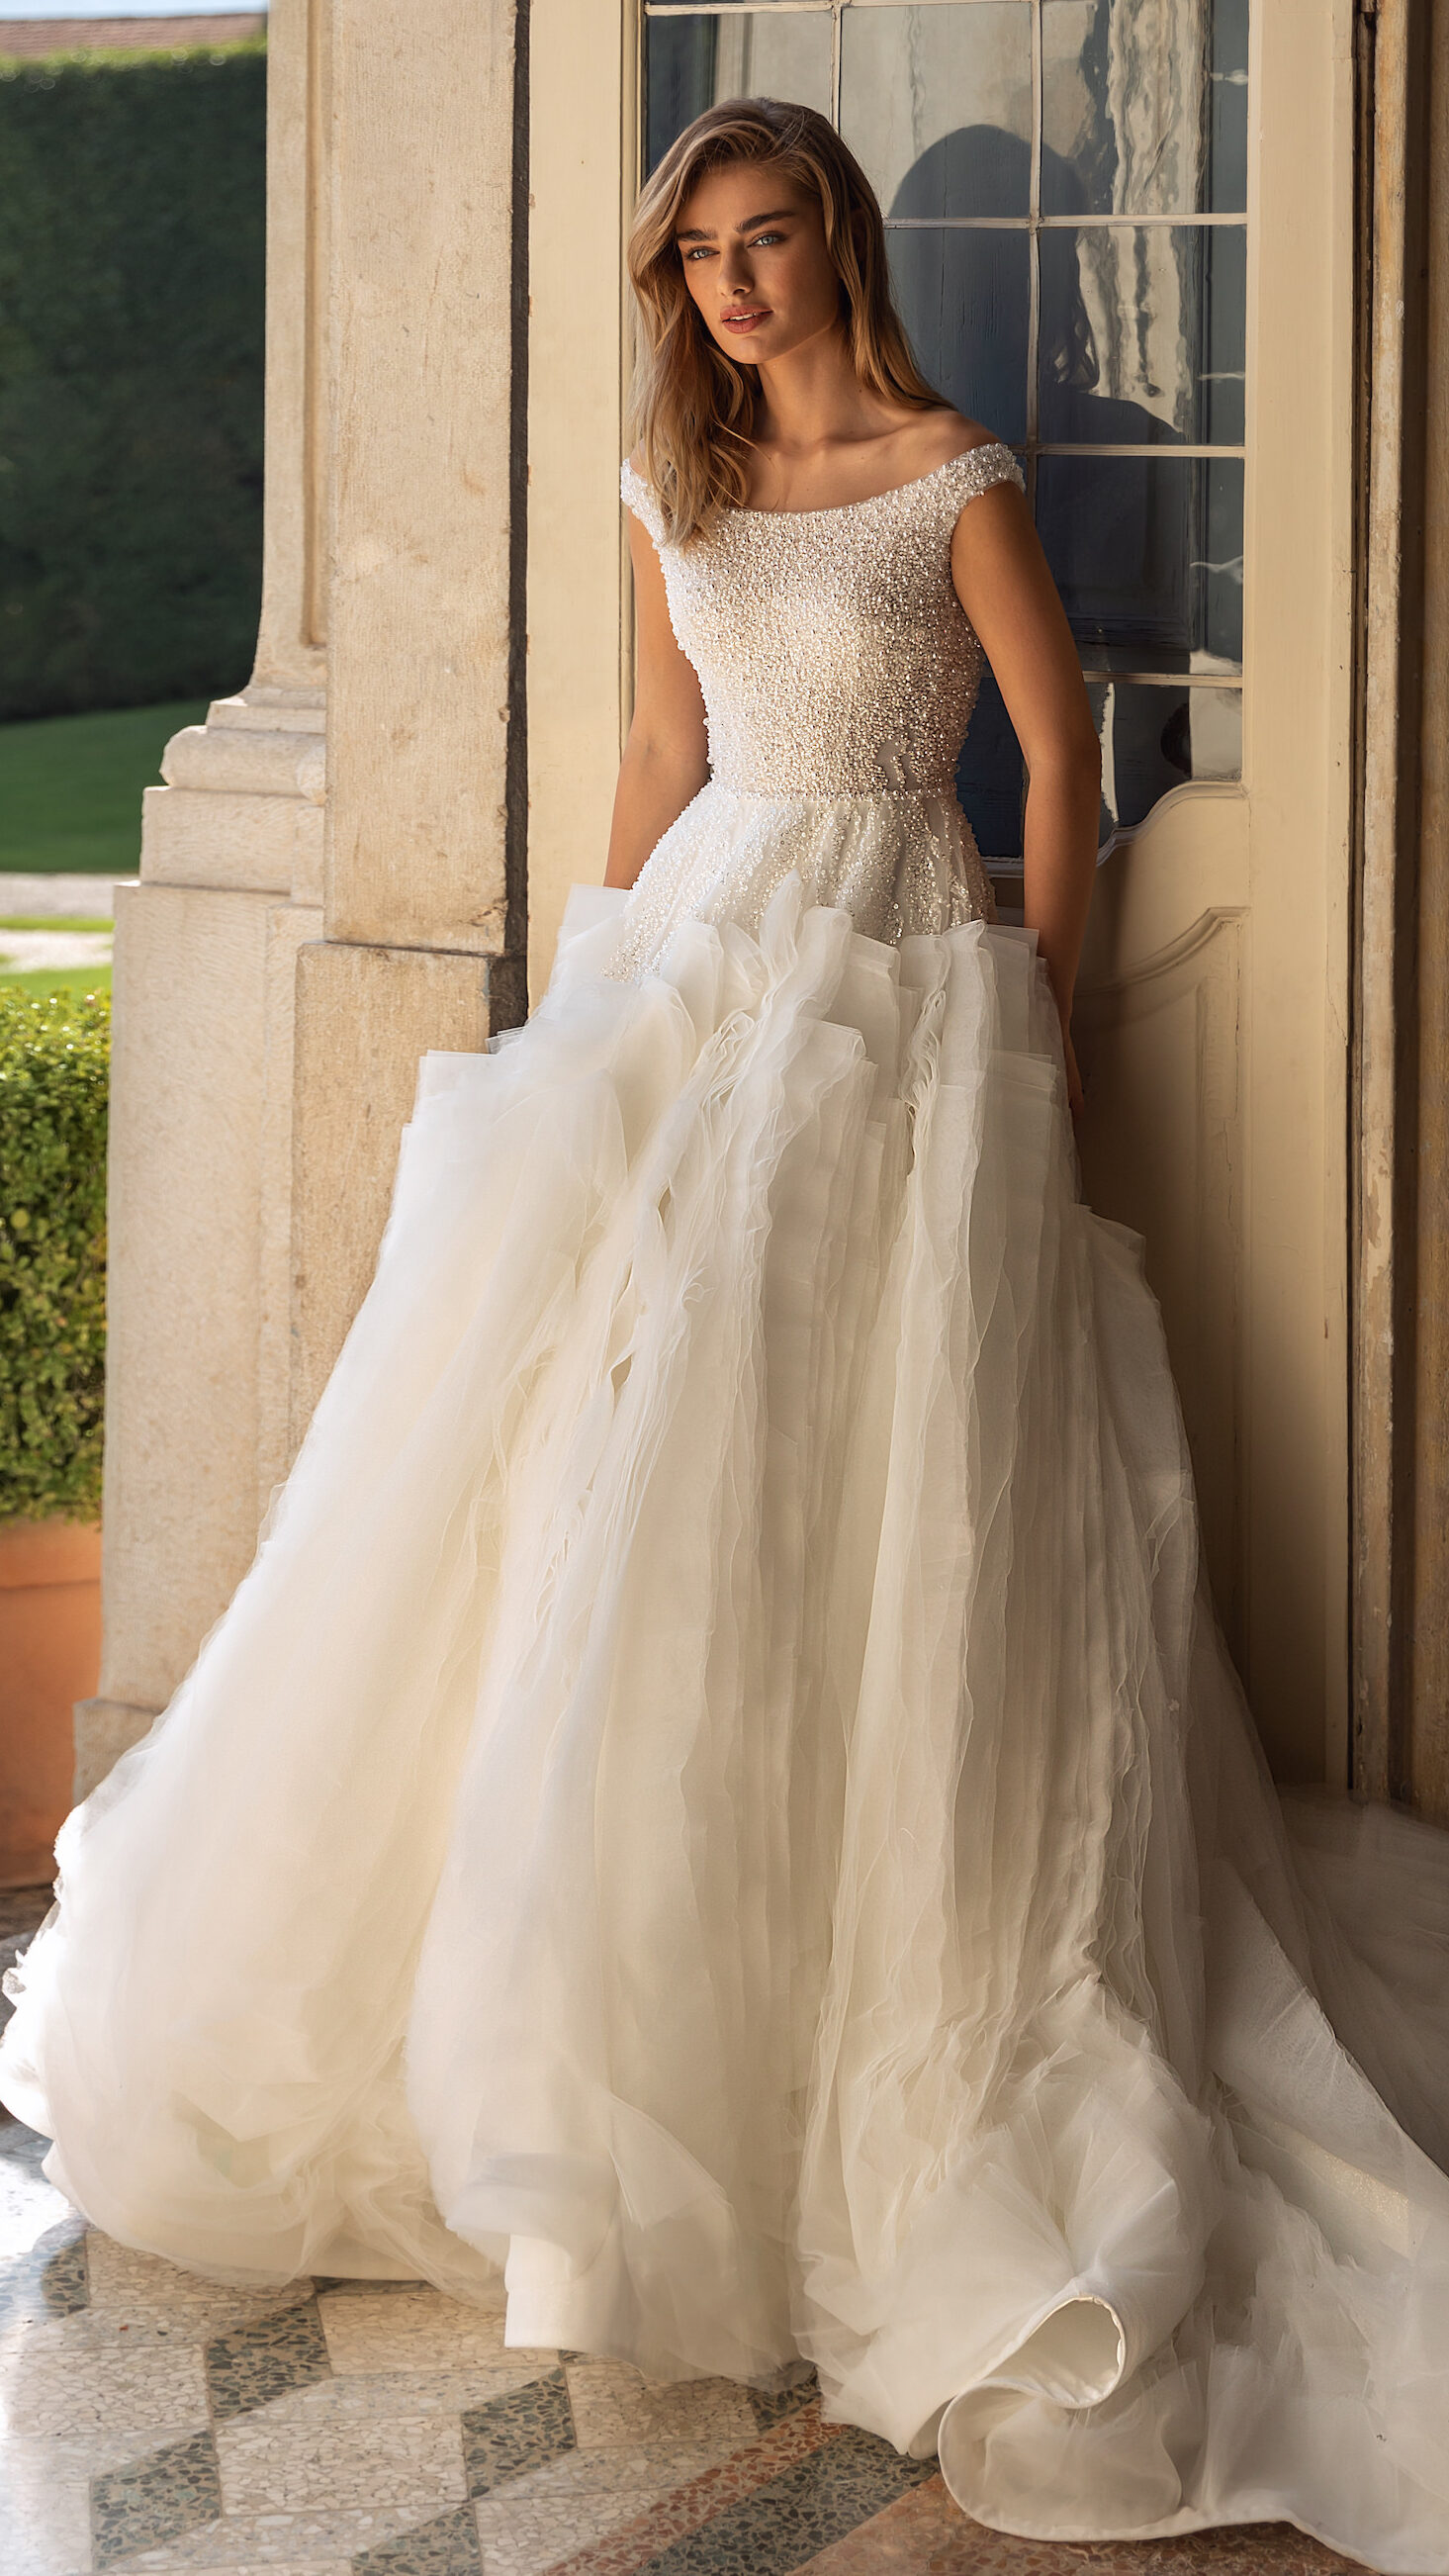 Elegant princess Ball gown wedding dress with ruffles - Pollardi 2023 -Orebella